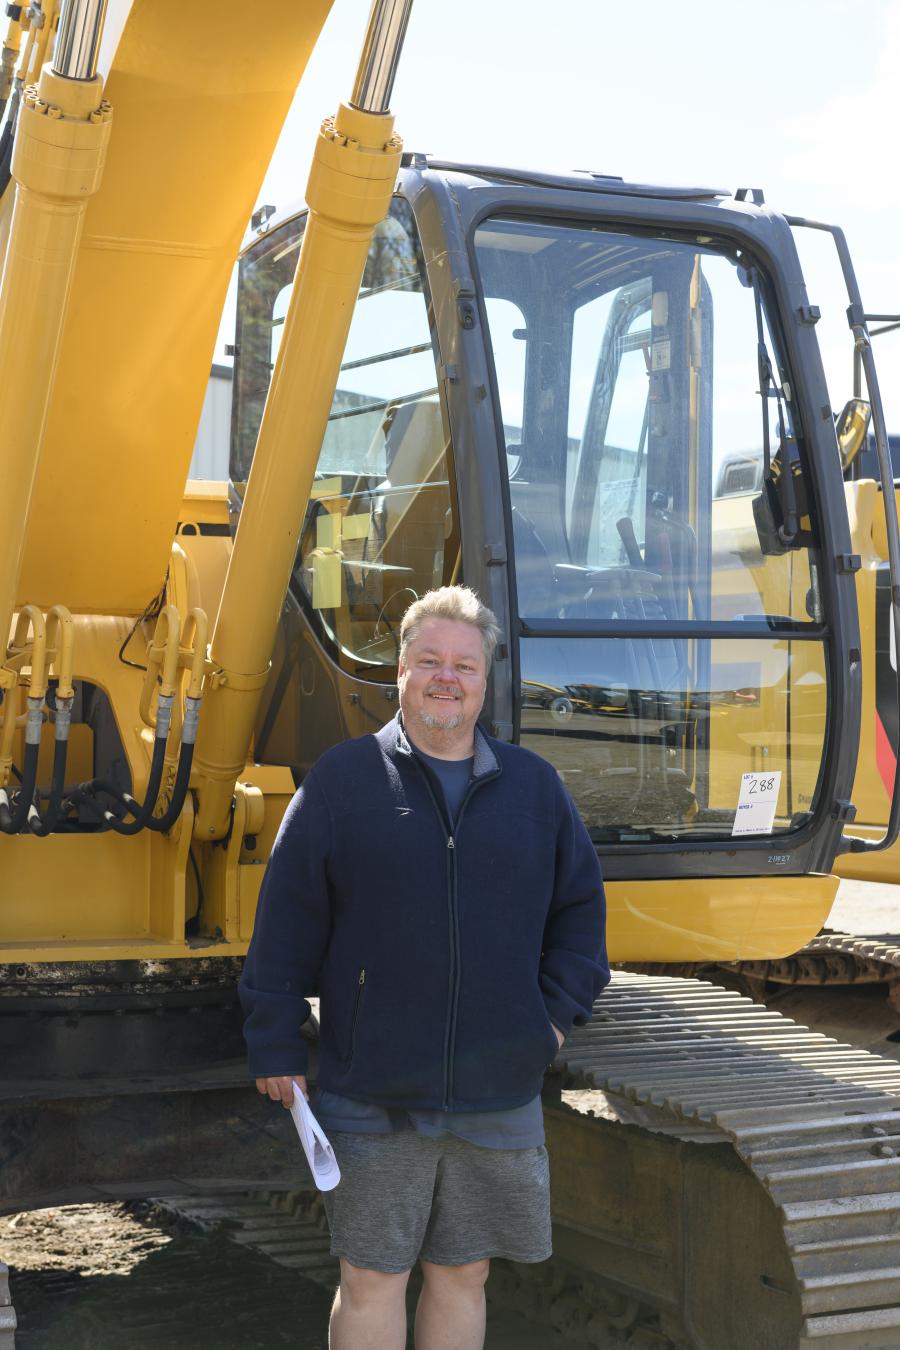 Ryan Geddes of Premiere Industries, Thomaston, Conn., with a 2004 John Deere 225CLC hydraulic excavator.